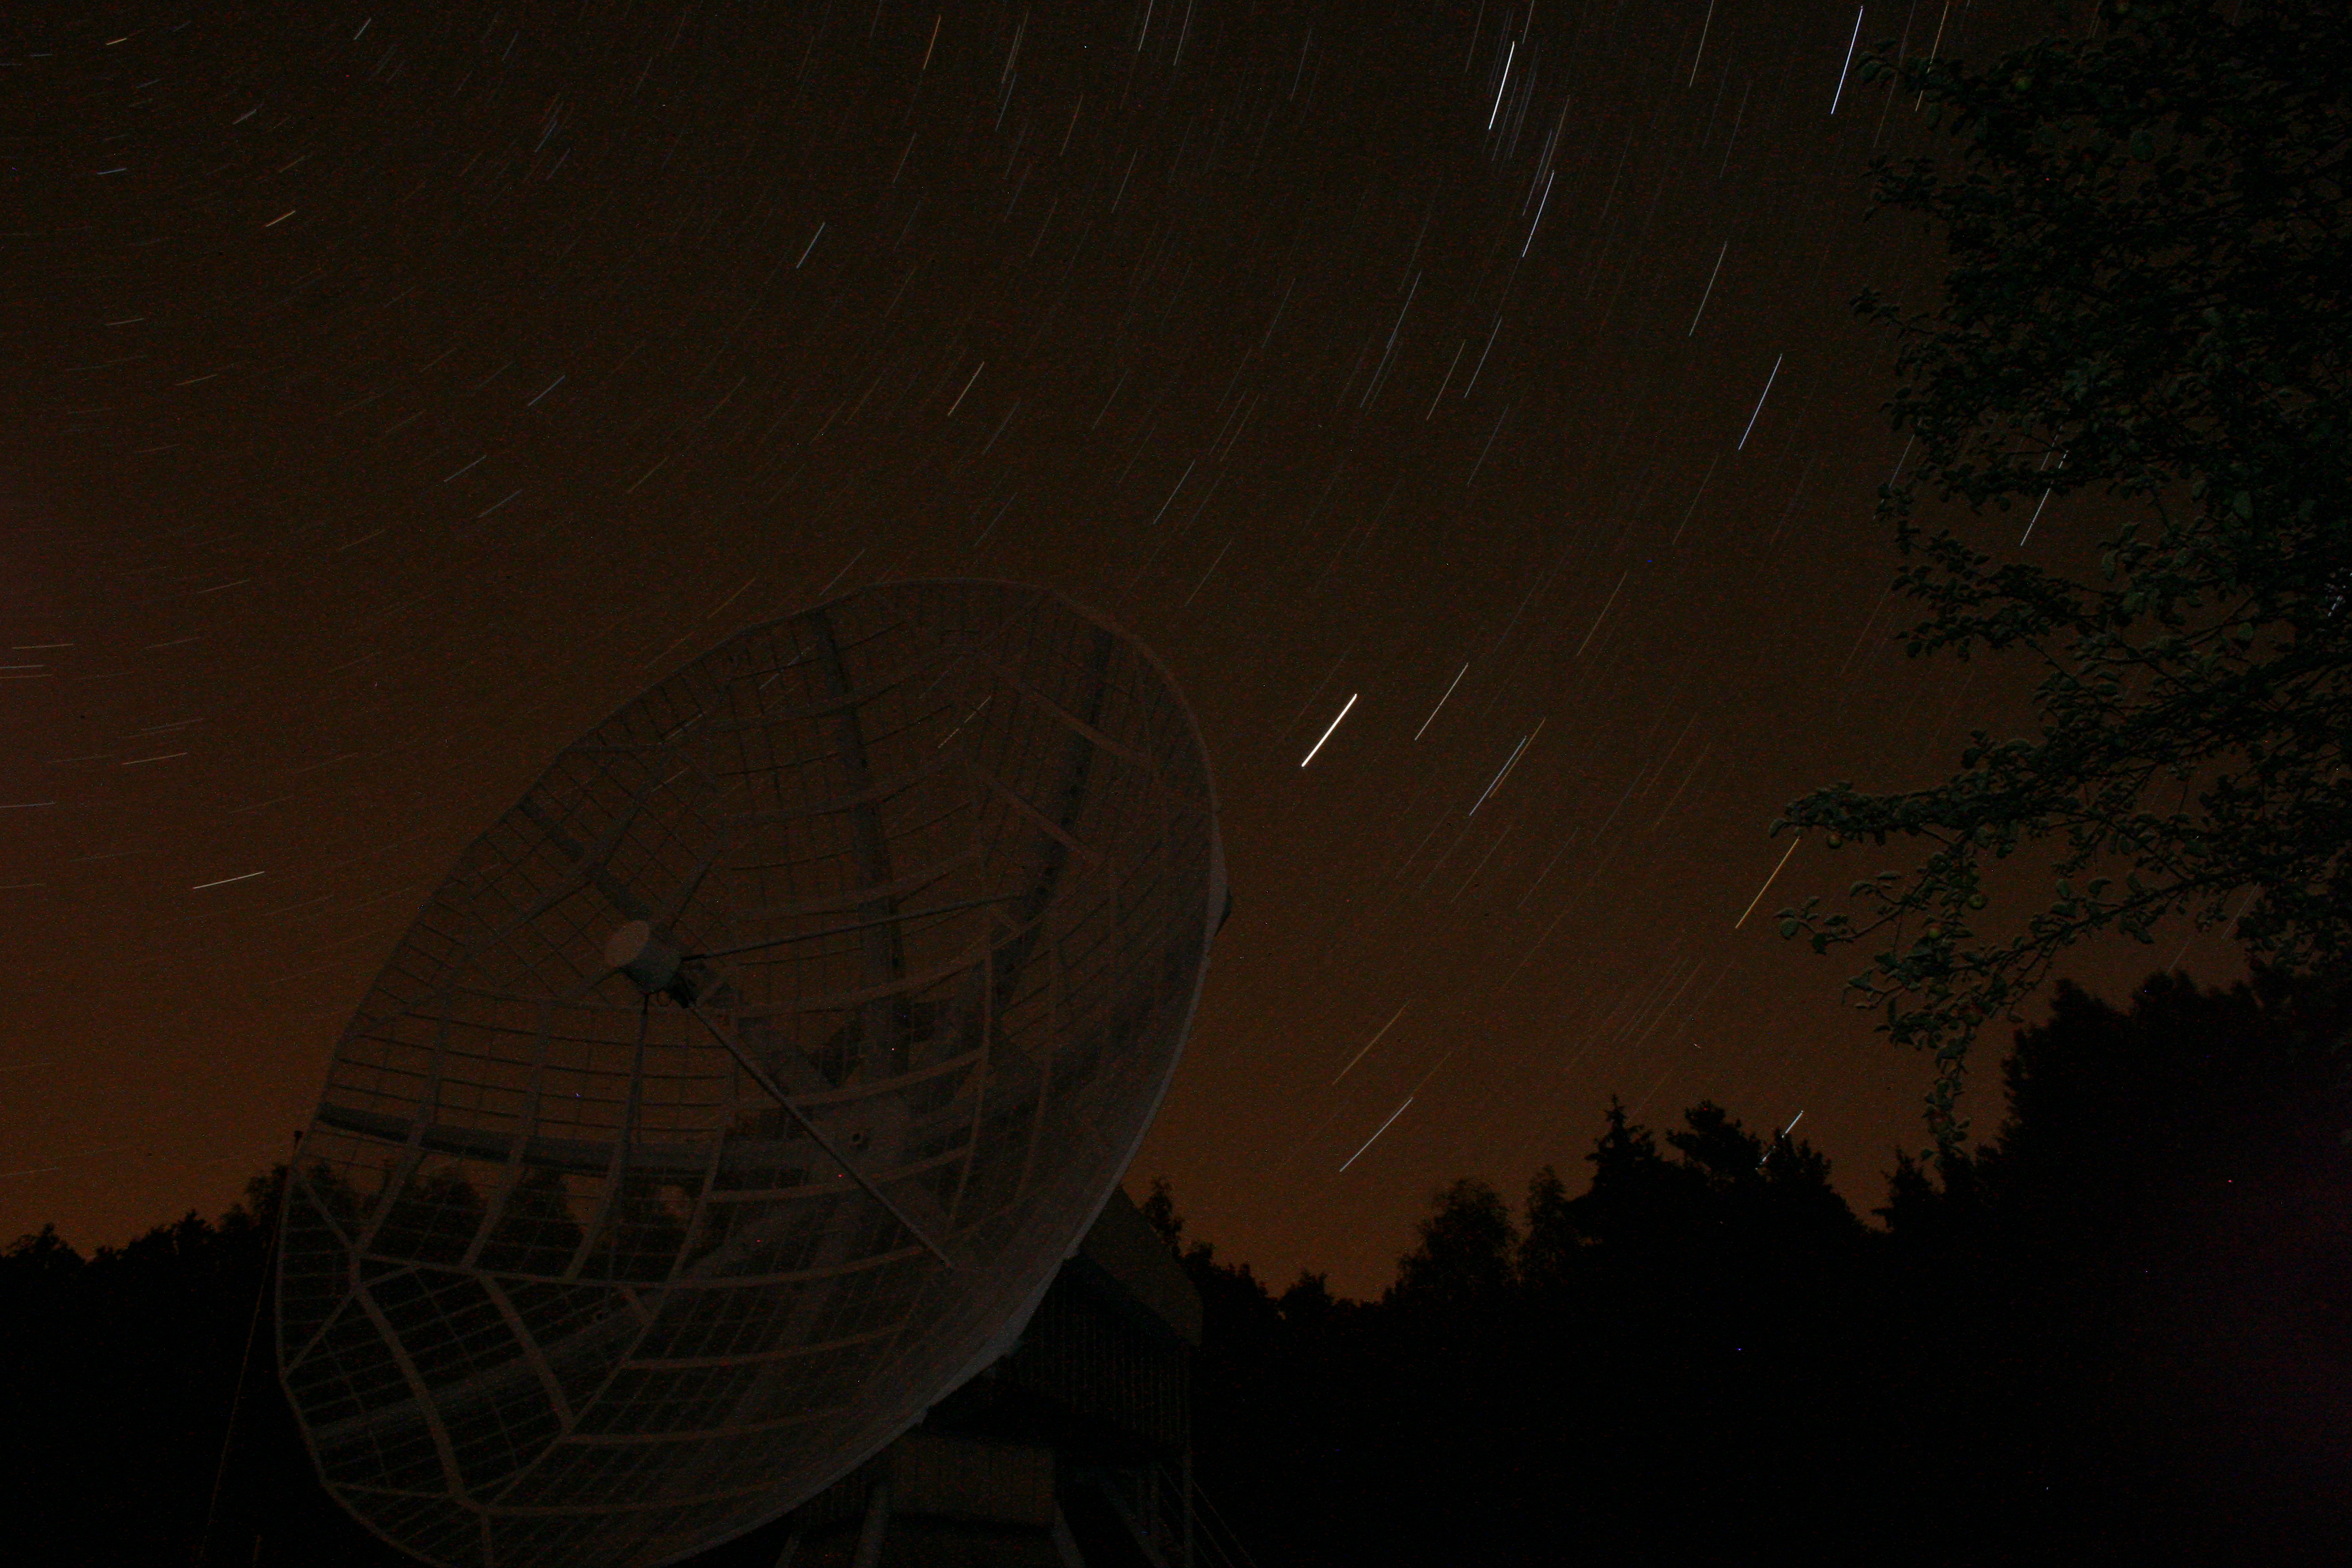 Radioteleskop1